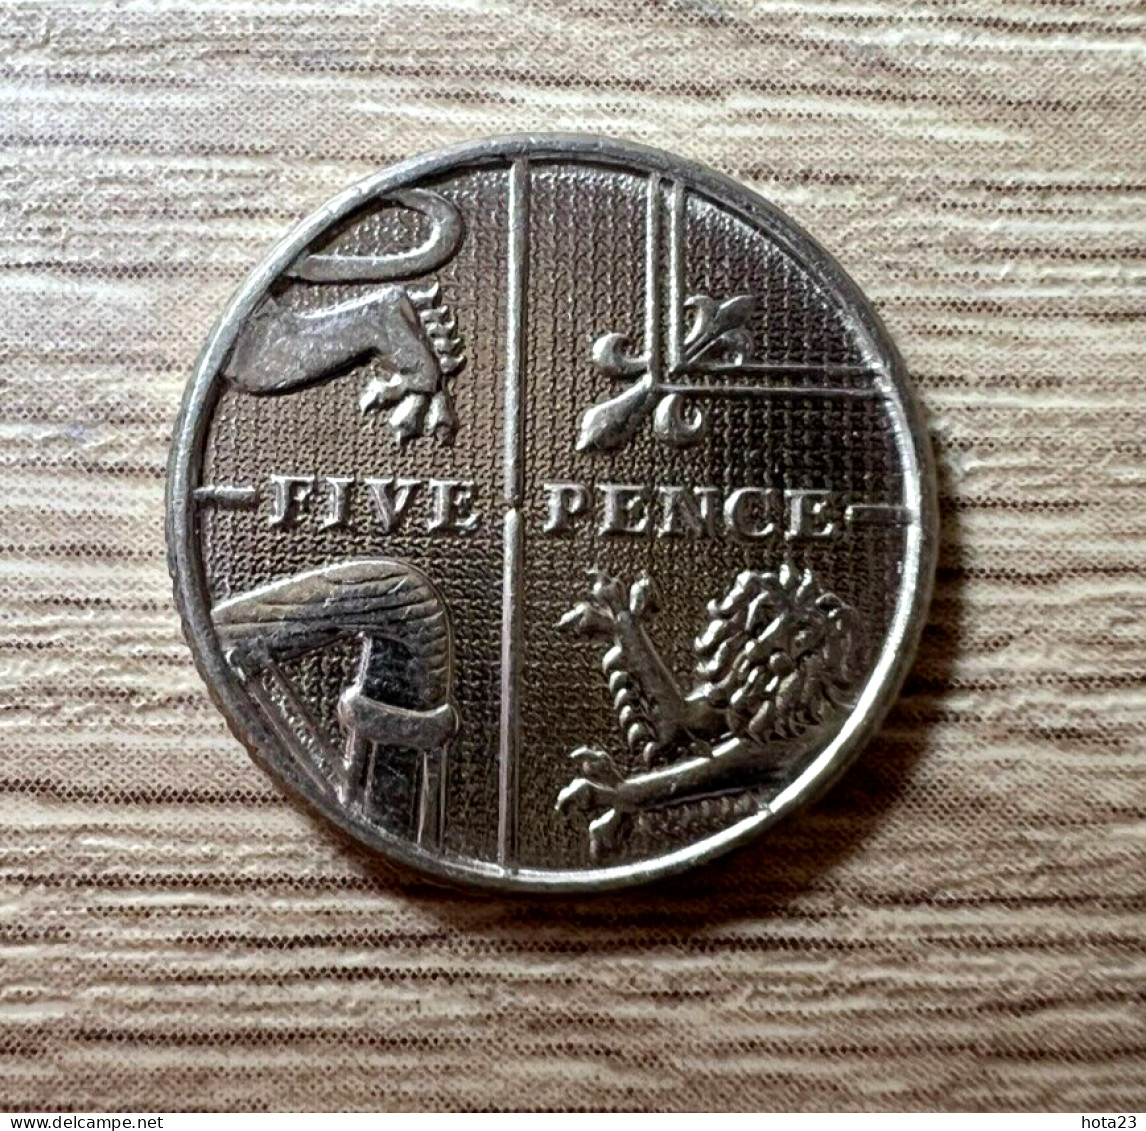 United Kingdom 5 Pence - Elizabeth II | Royal Shield| Coin KM1109d 2012 Year - 5 Pence & 5 New Pence